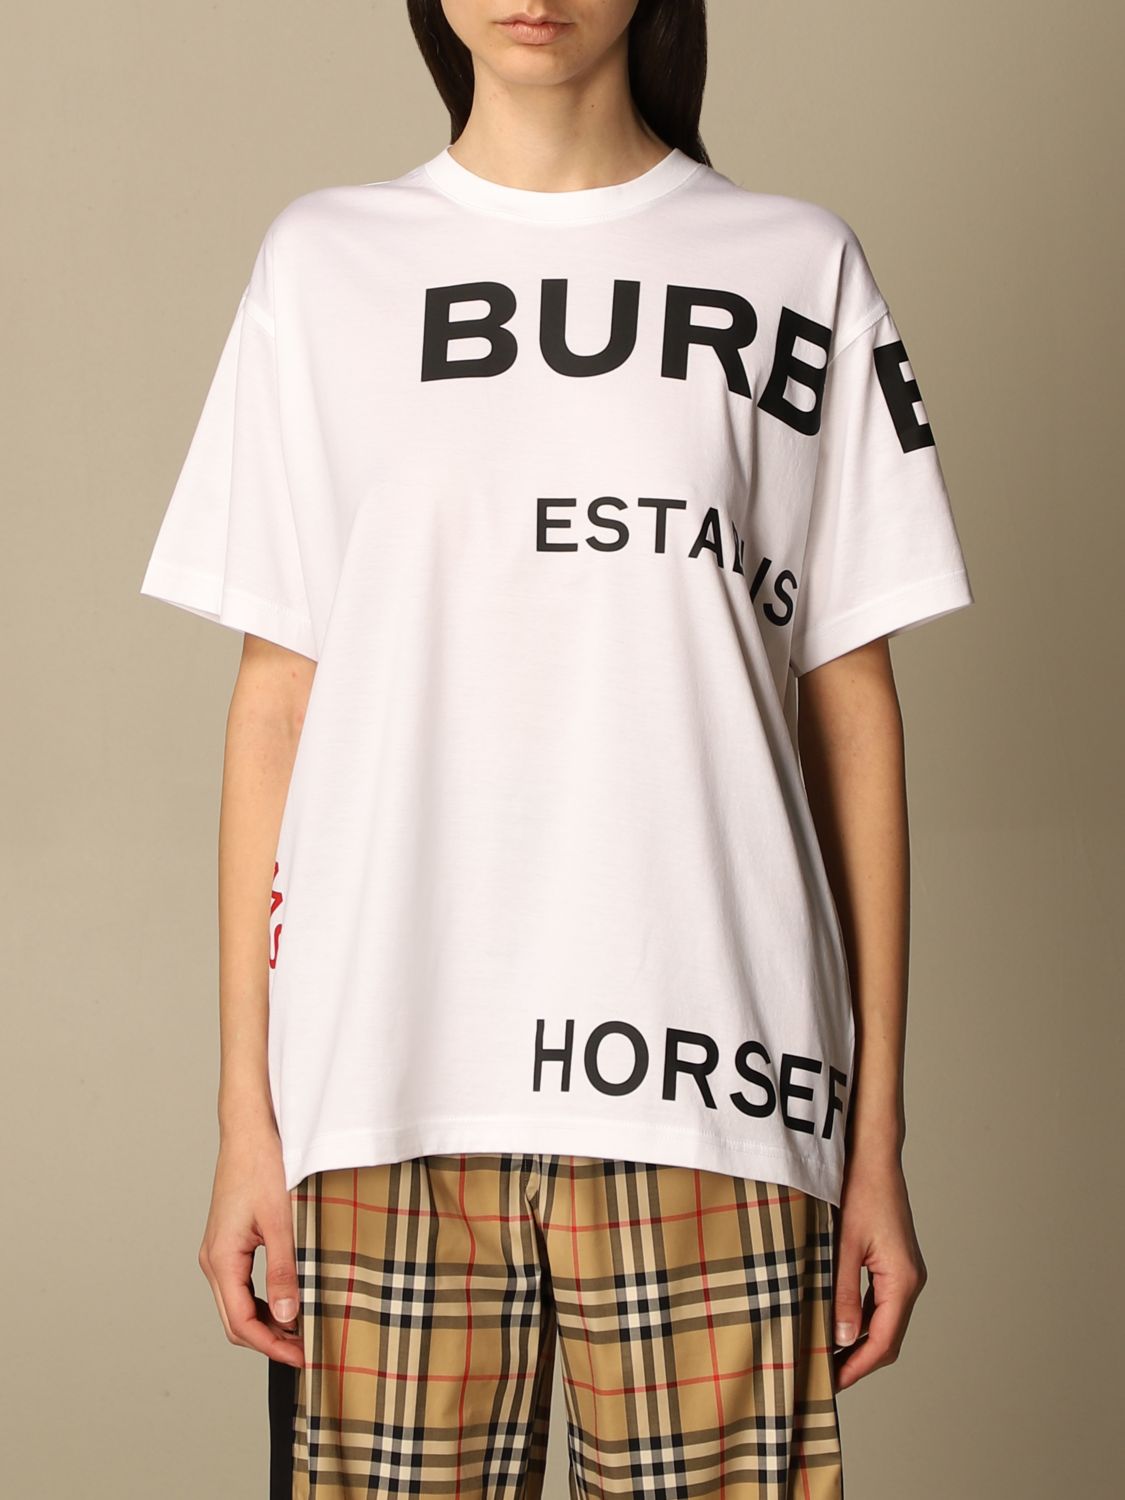 burberry t shirt new